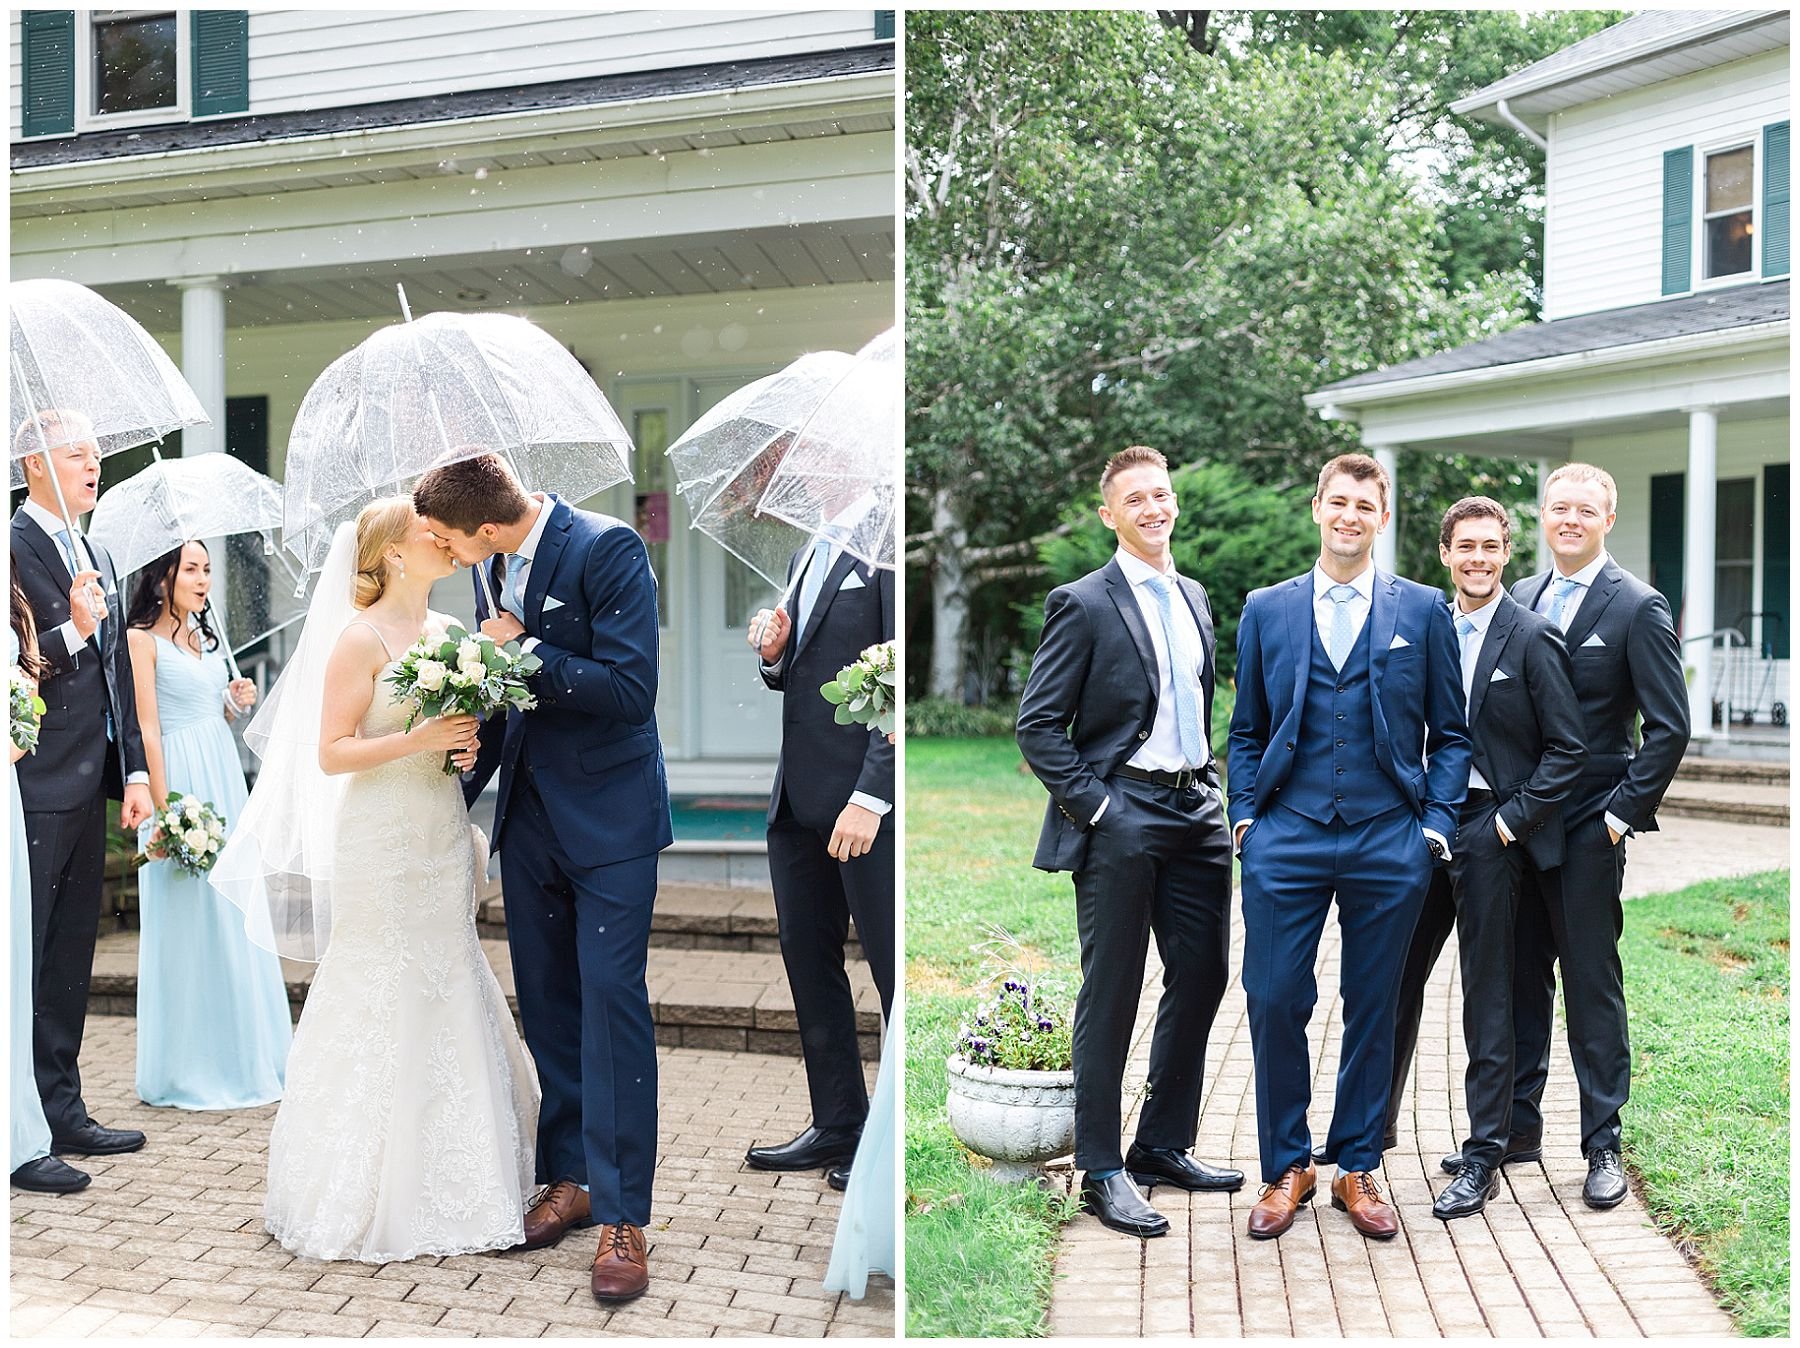 Bridal party photos in the rain